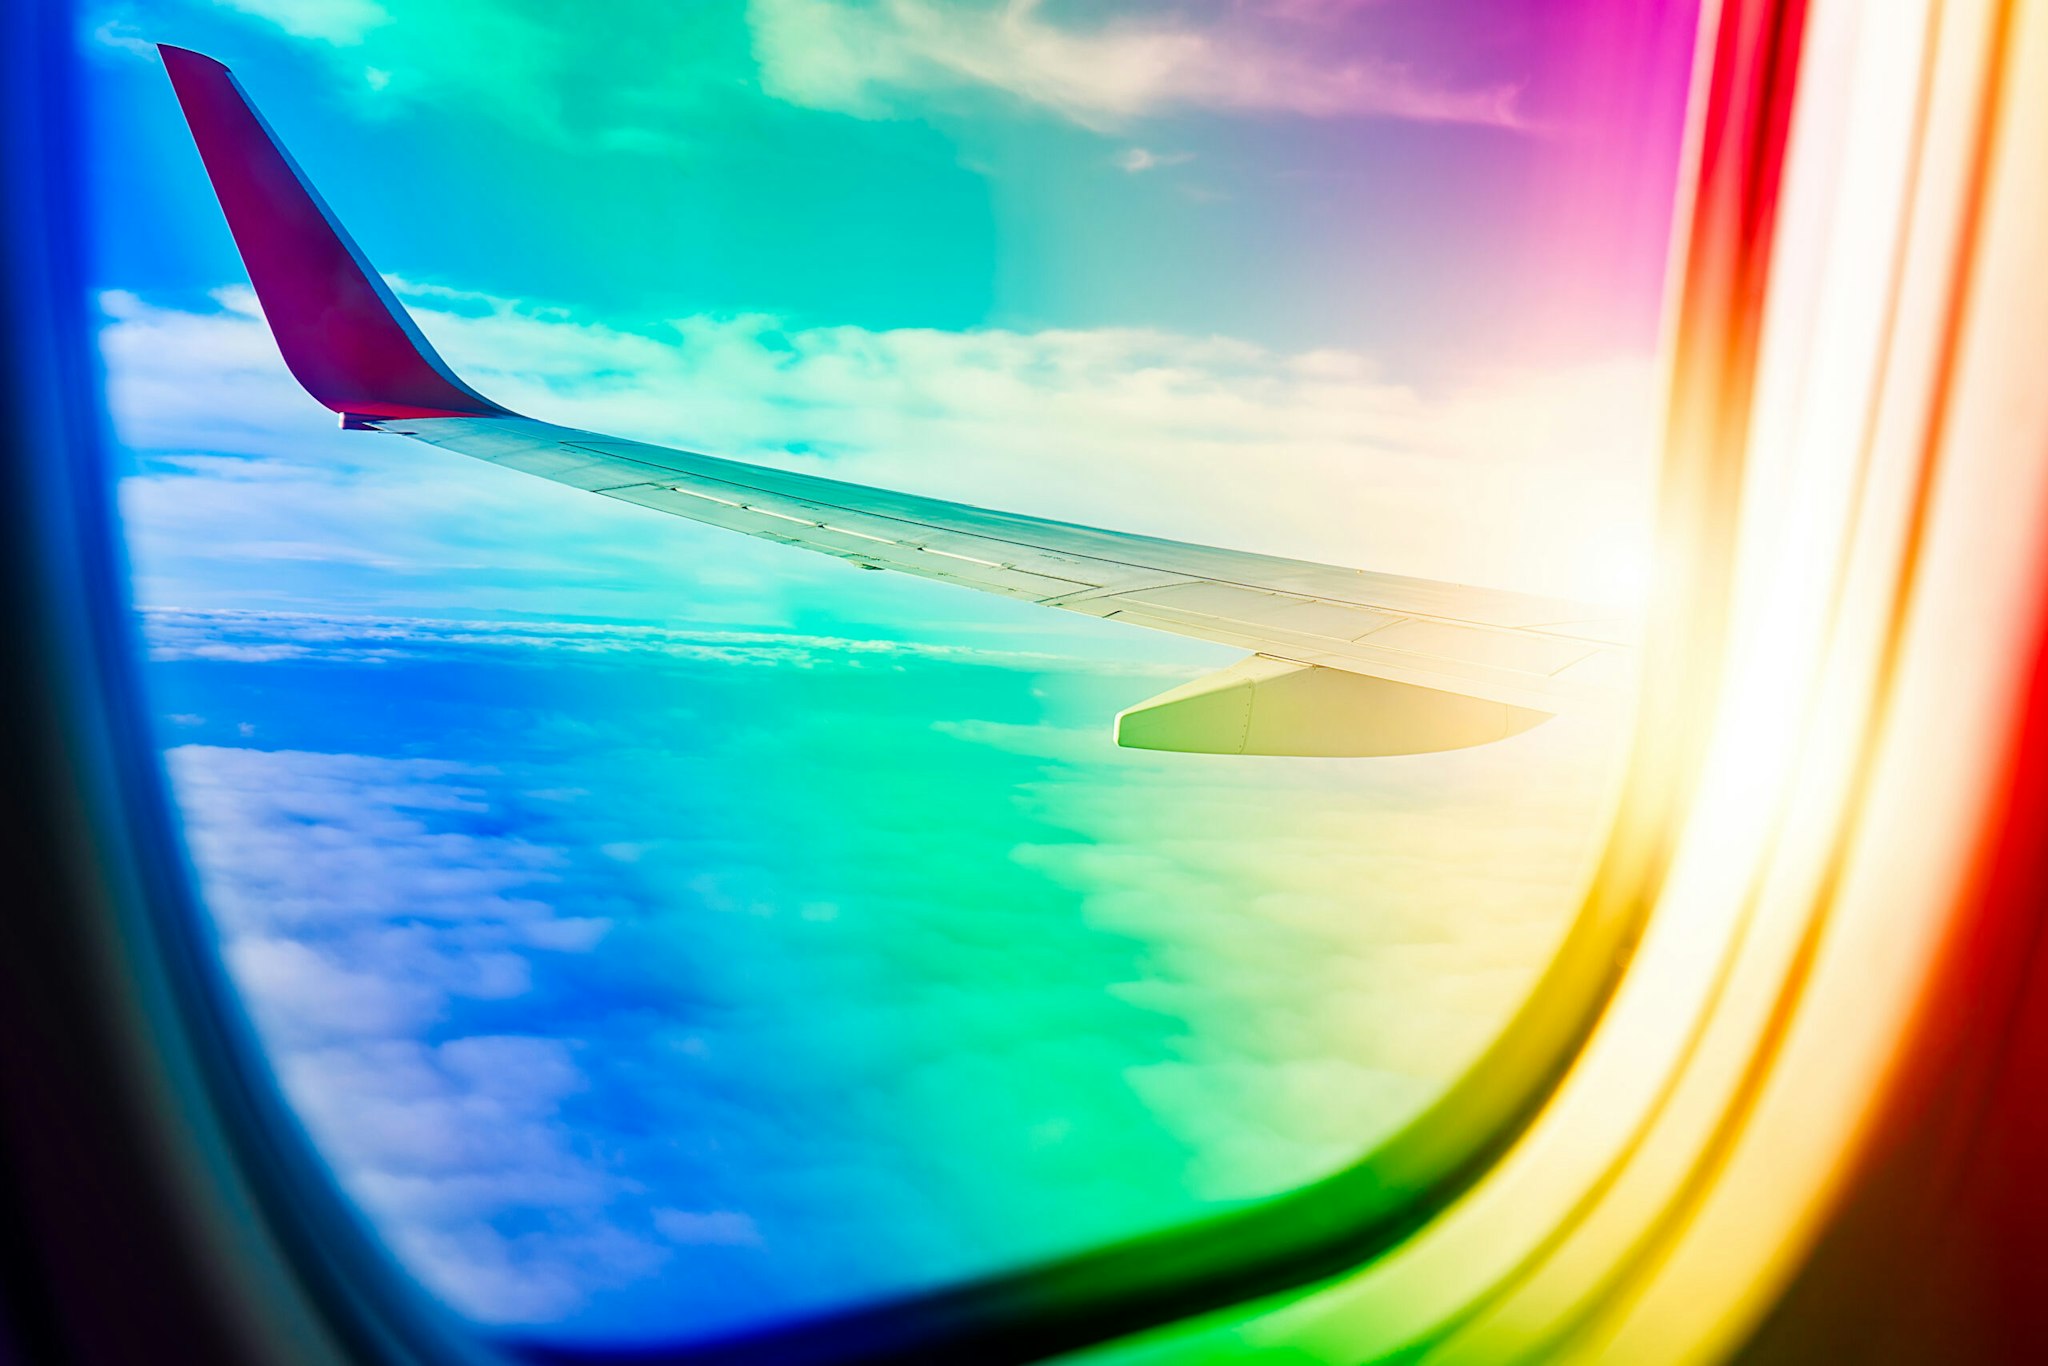 Window View in plane